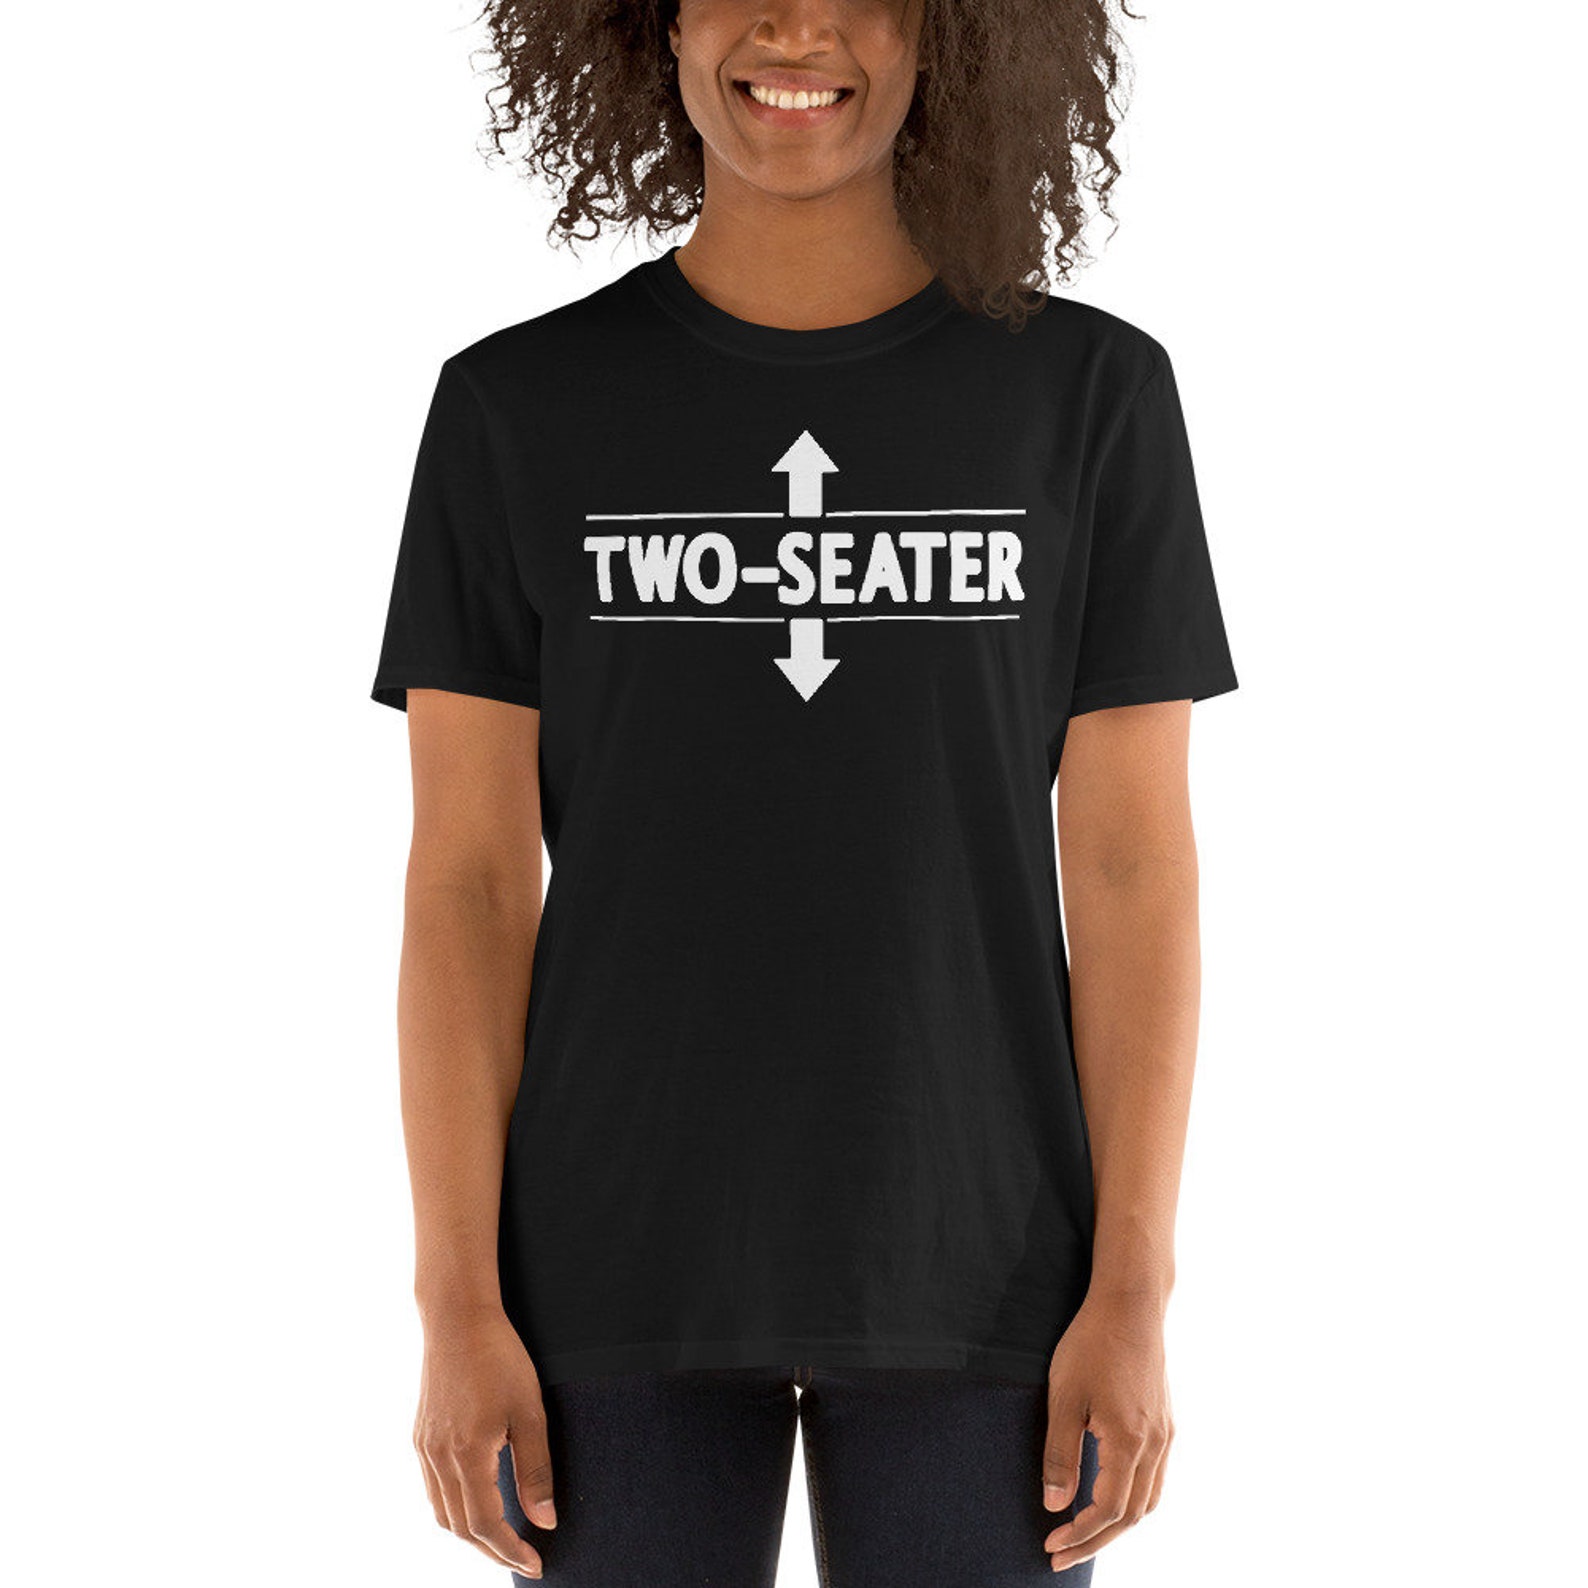 Two Seater Shirt Funny Shirt Funny tshirt Funny shirts for | Etsy